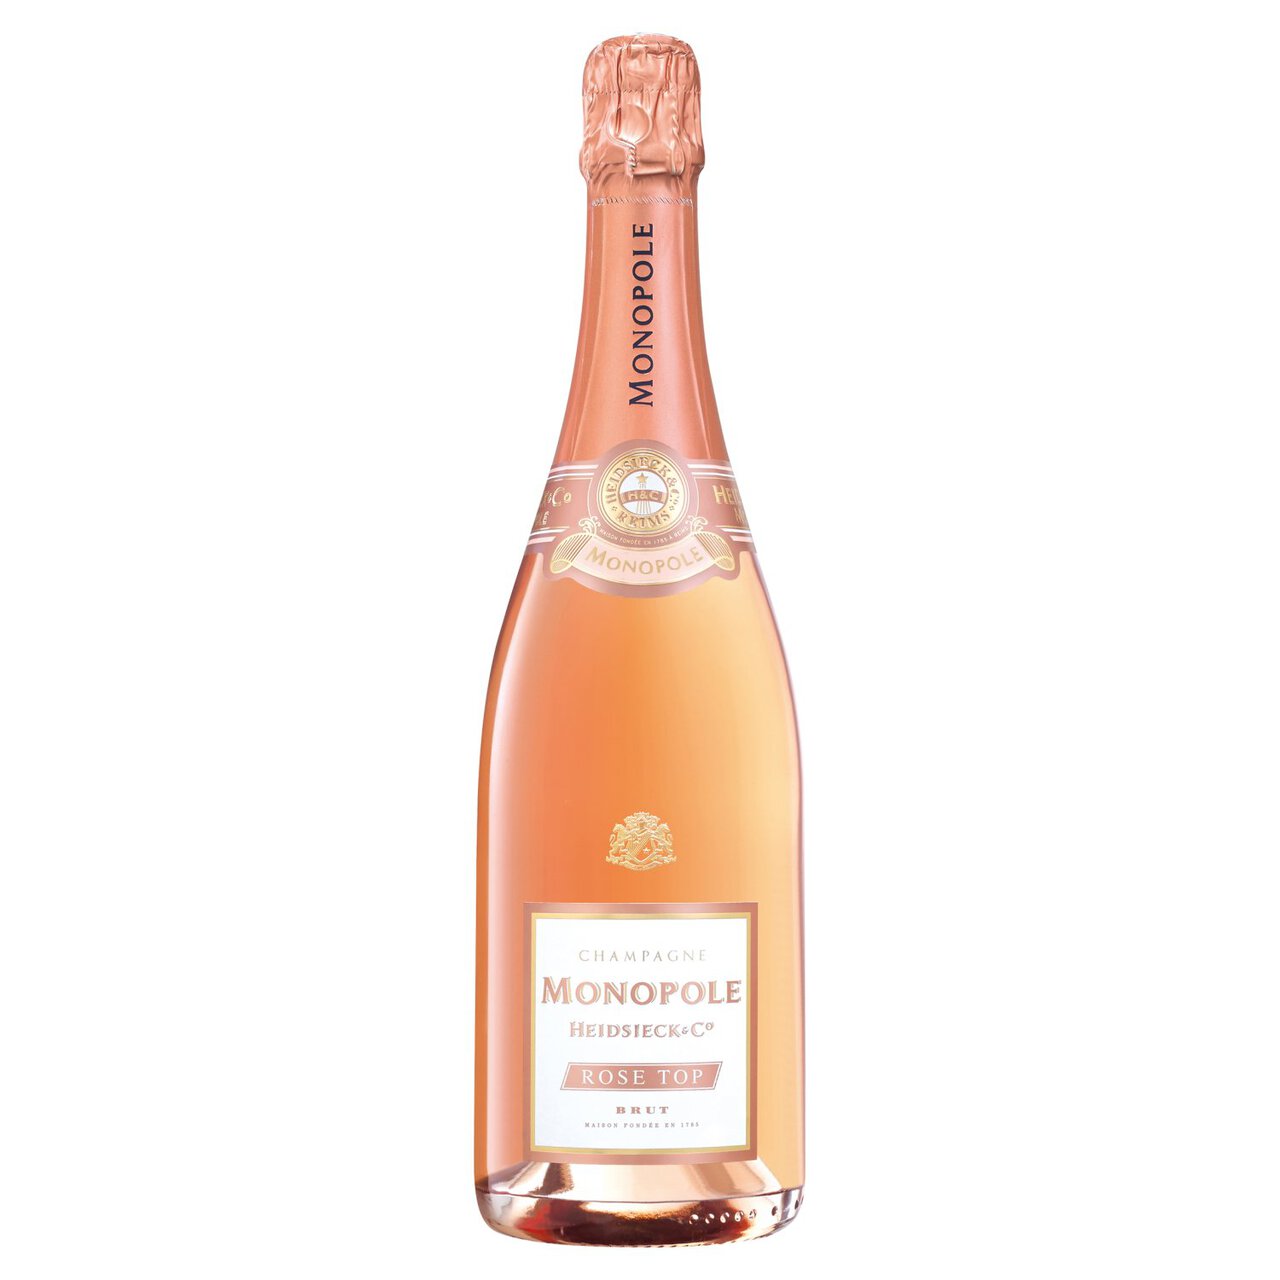 Heidsieck Monopole Rose Top Champagne NV 75cl